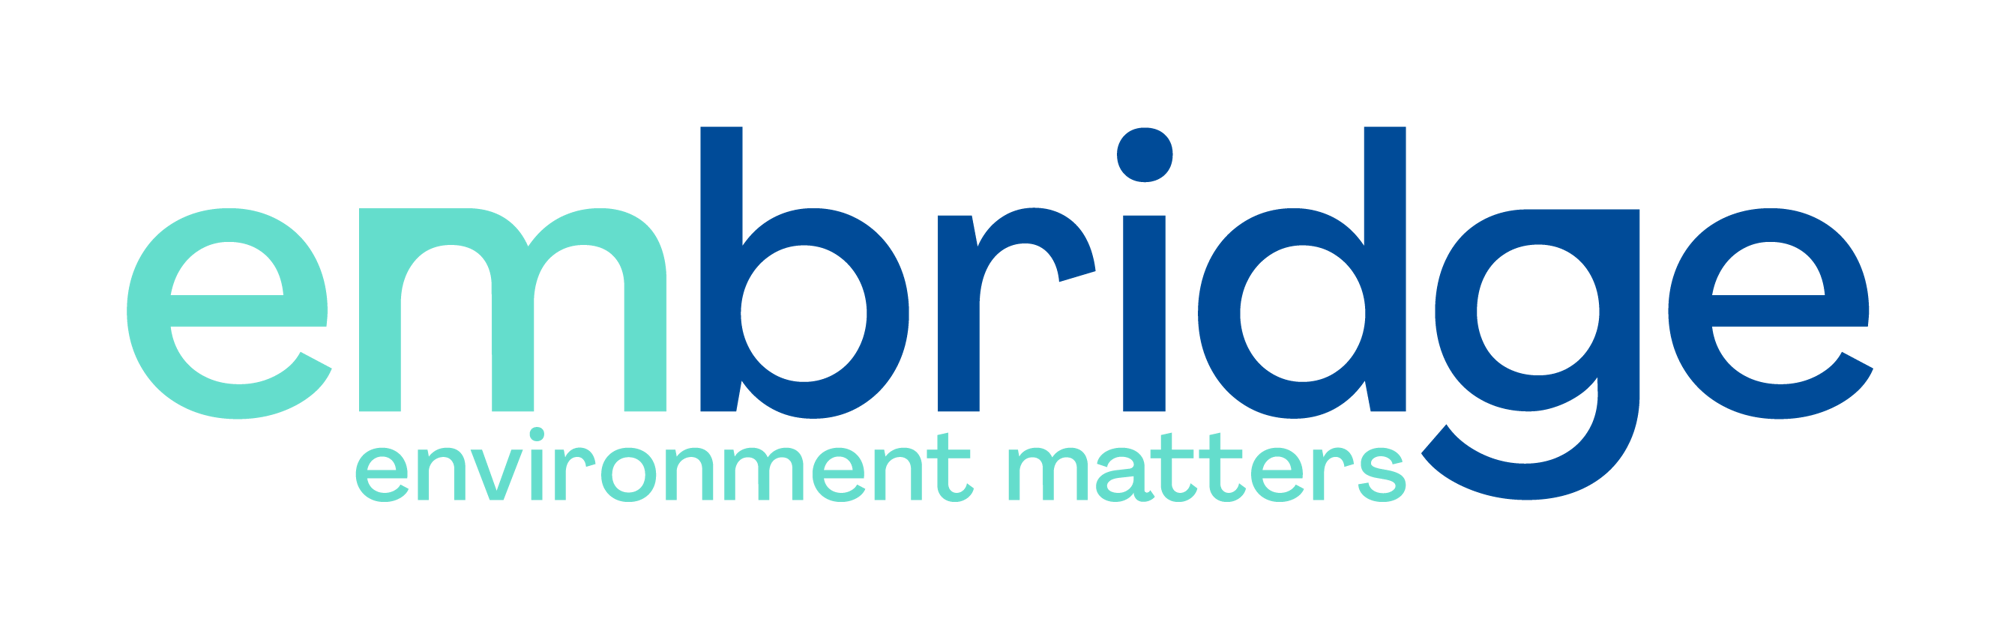 embridge_logo